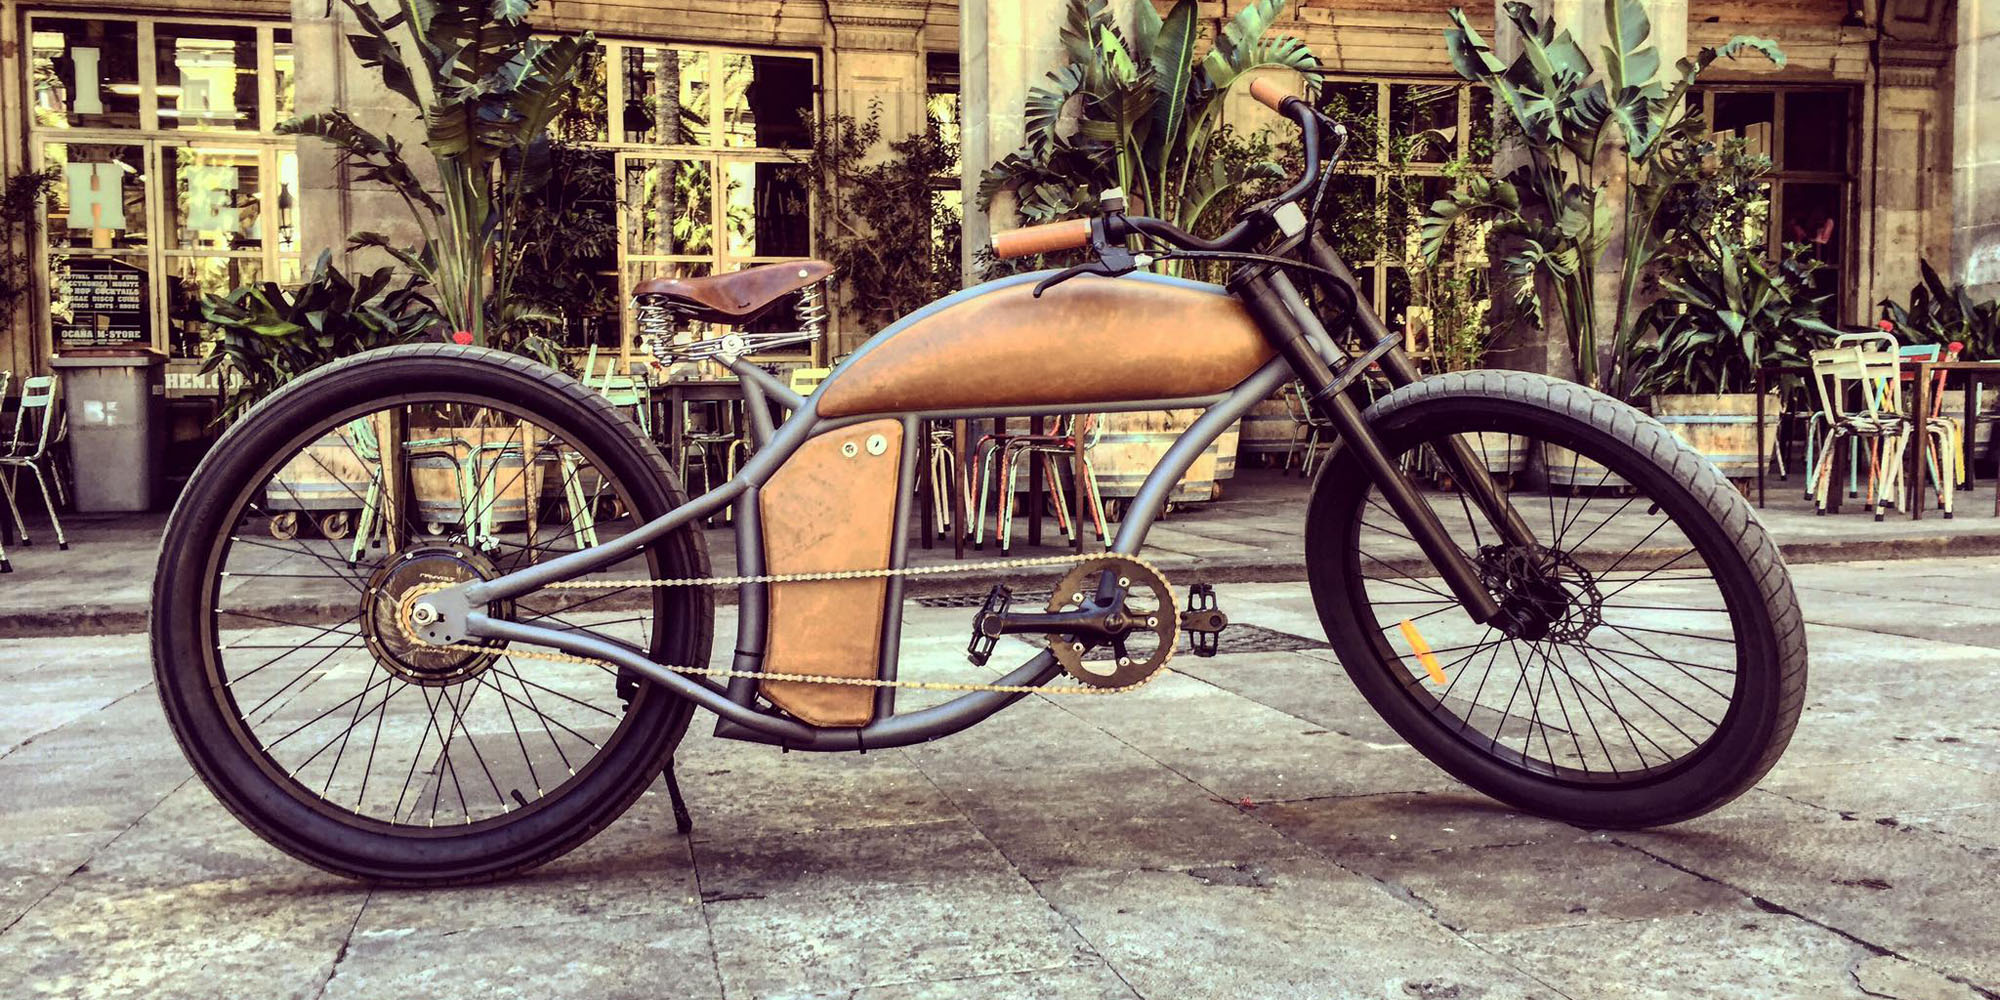 rayvolt-vintage-electric-bike-cruzer-designboom-header.jpg